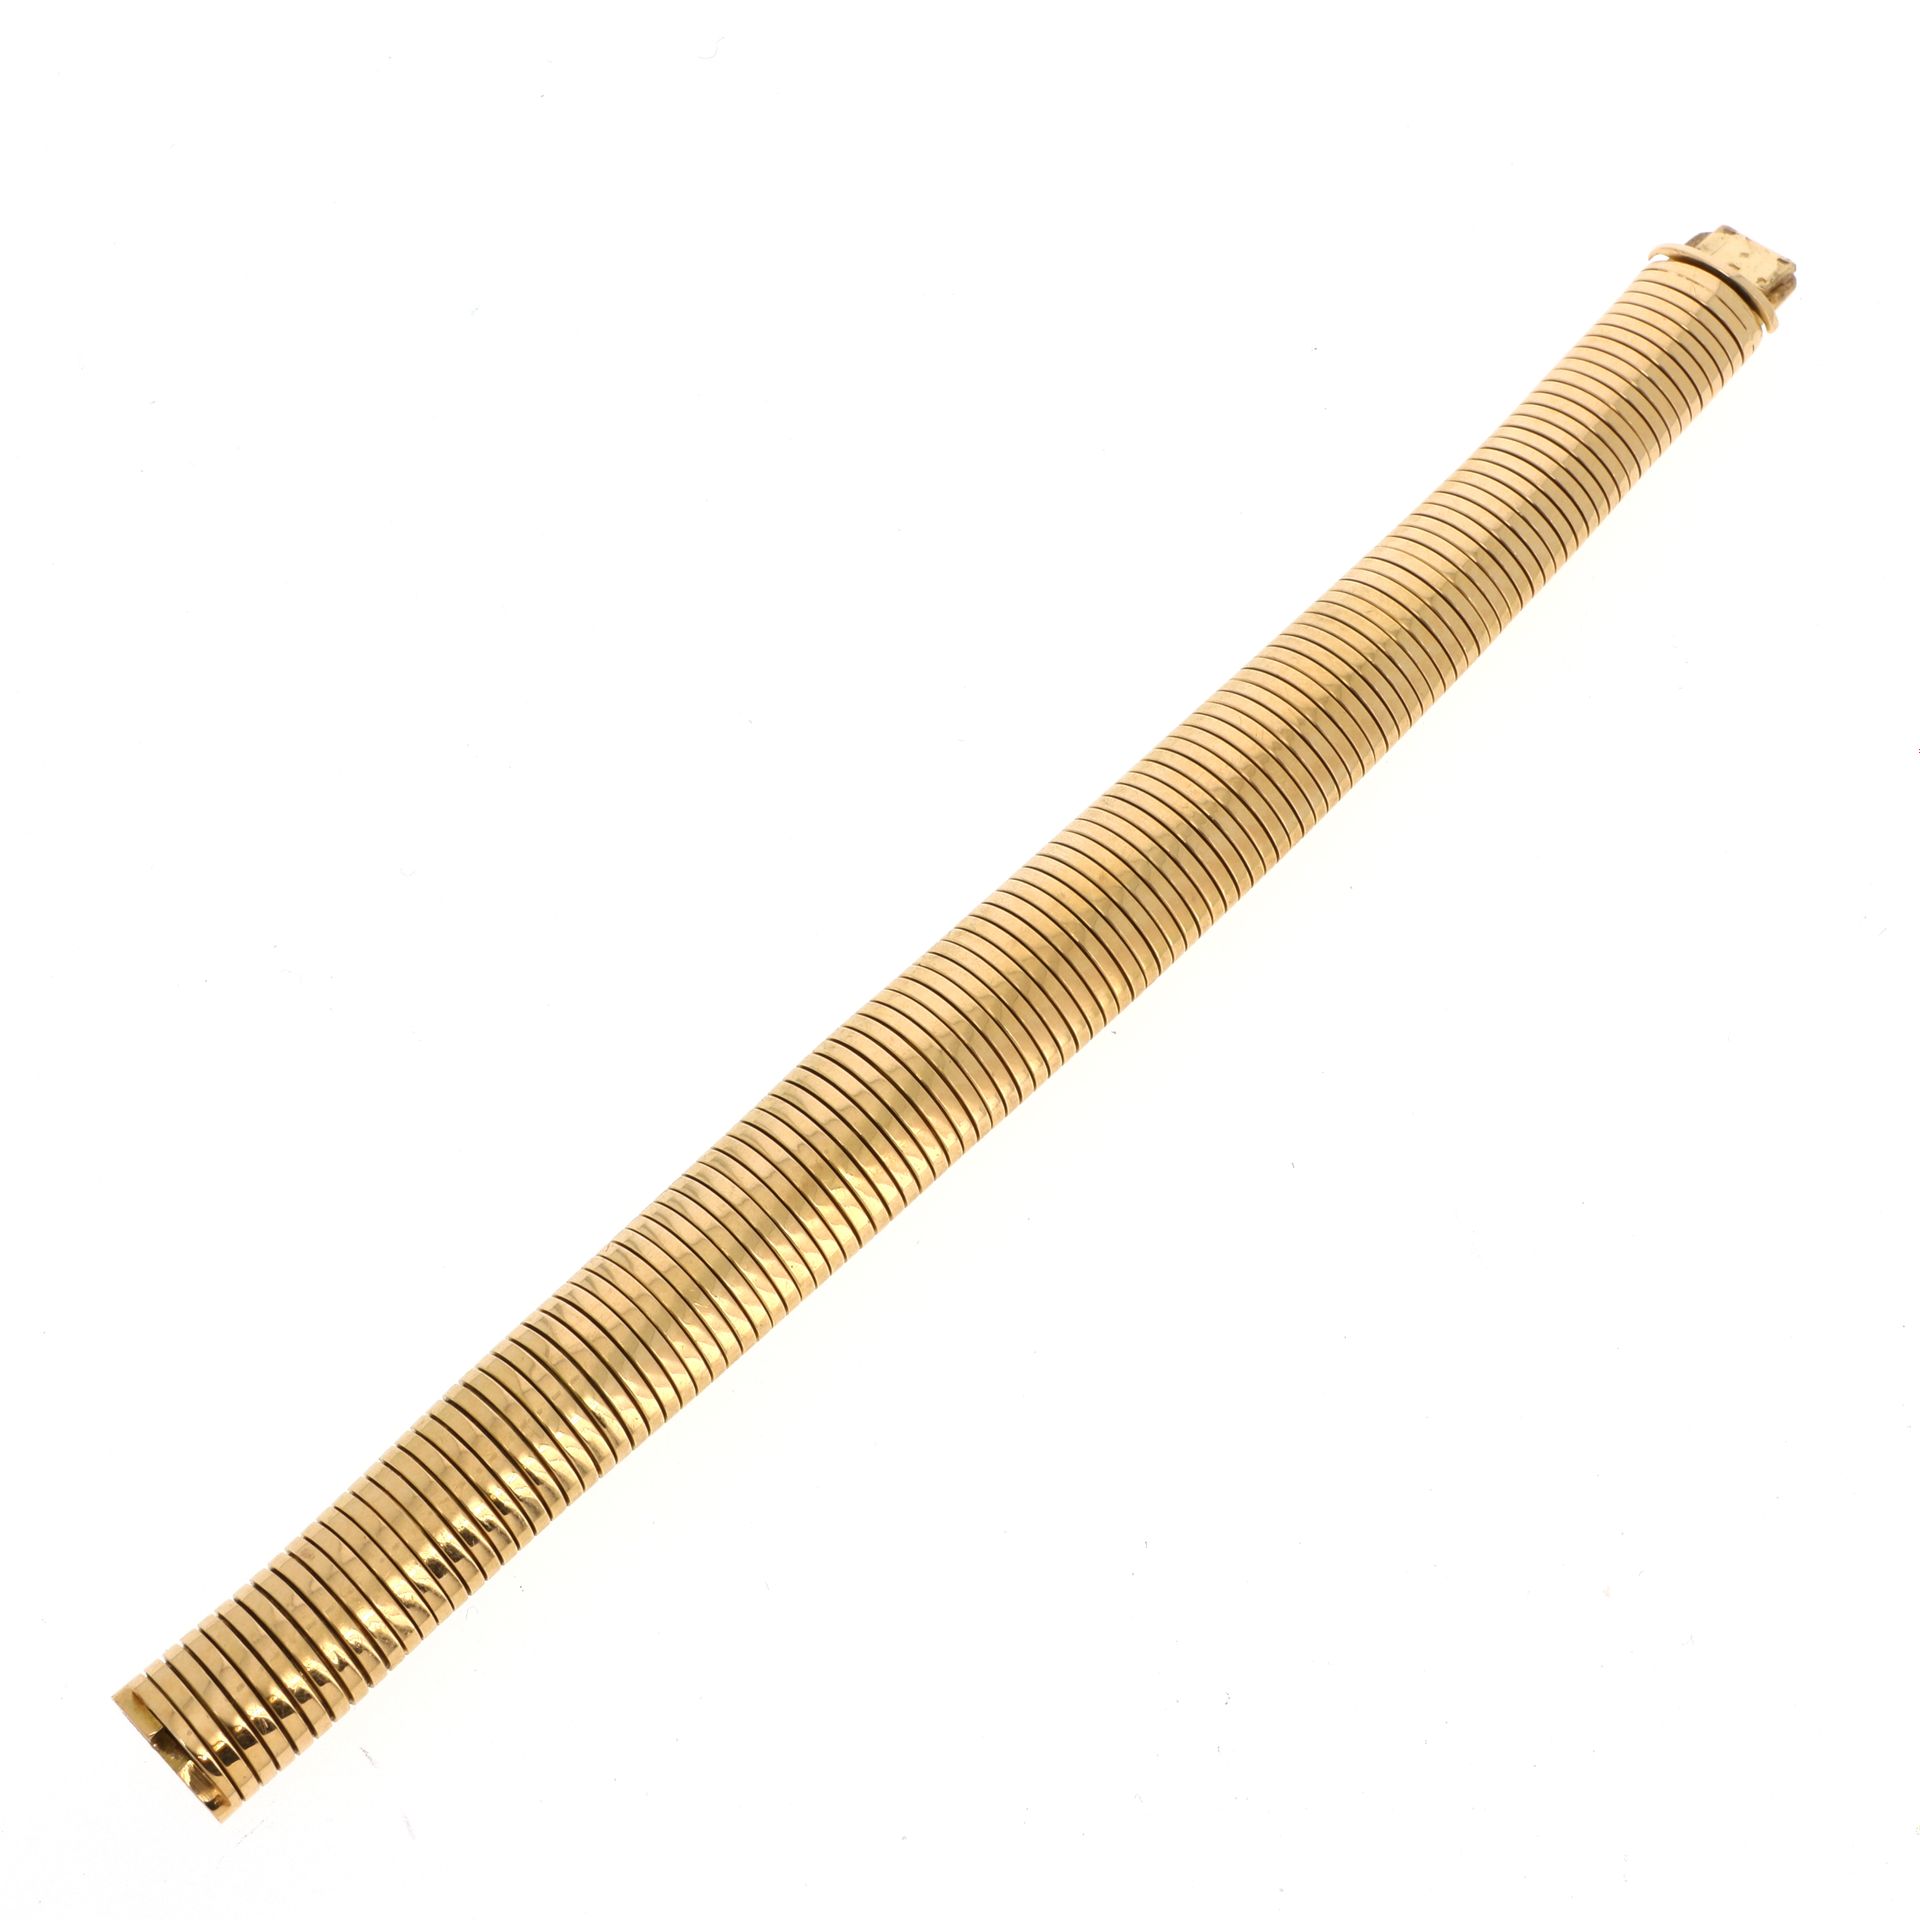 Null 管气手镯
黄金的。 
重量：65.4克。(18k - 750)
一个18K金的手镯。 

RC : 
长度：20厘米（约）。